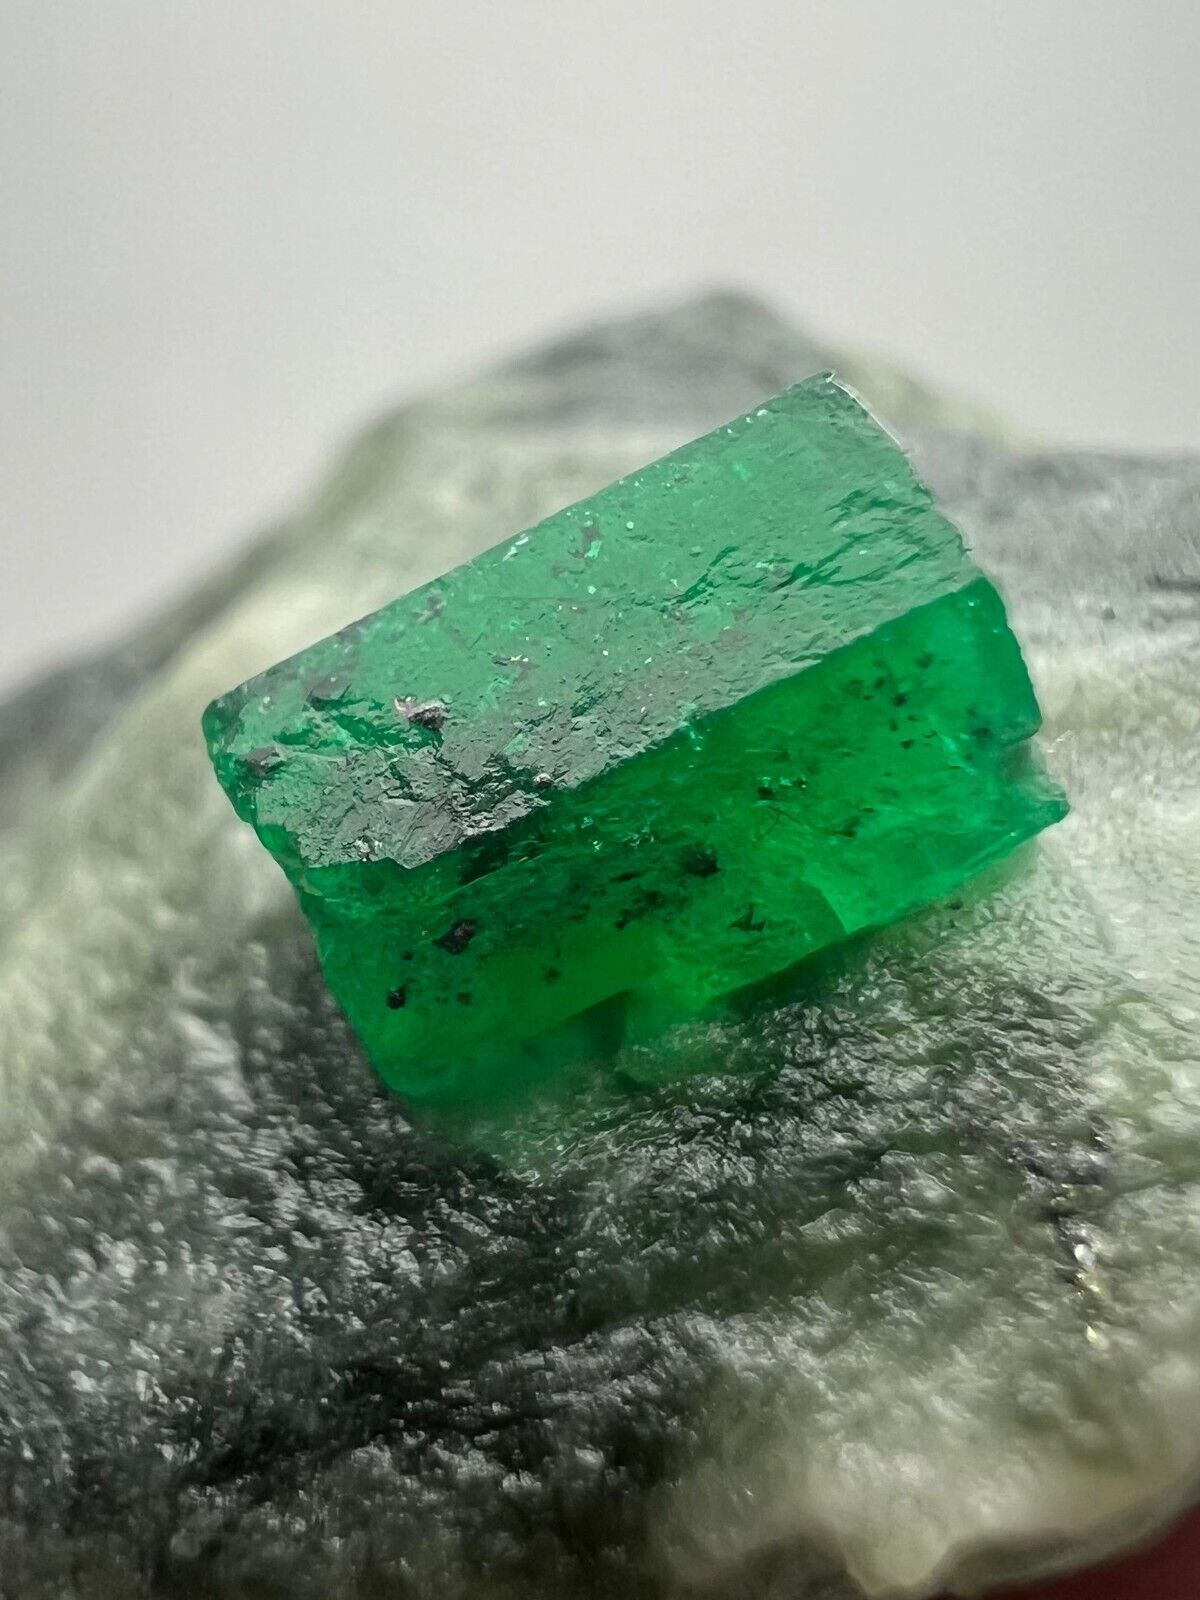 Stunning Top quality Swat Emerald crystal on matrix, 96 carats.